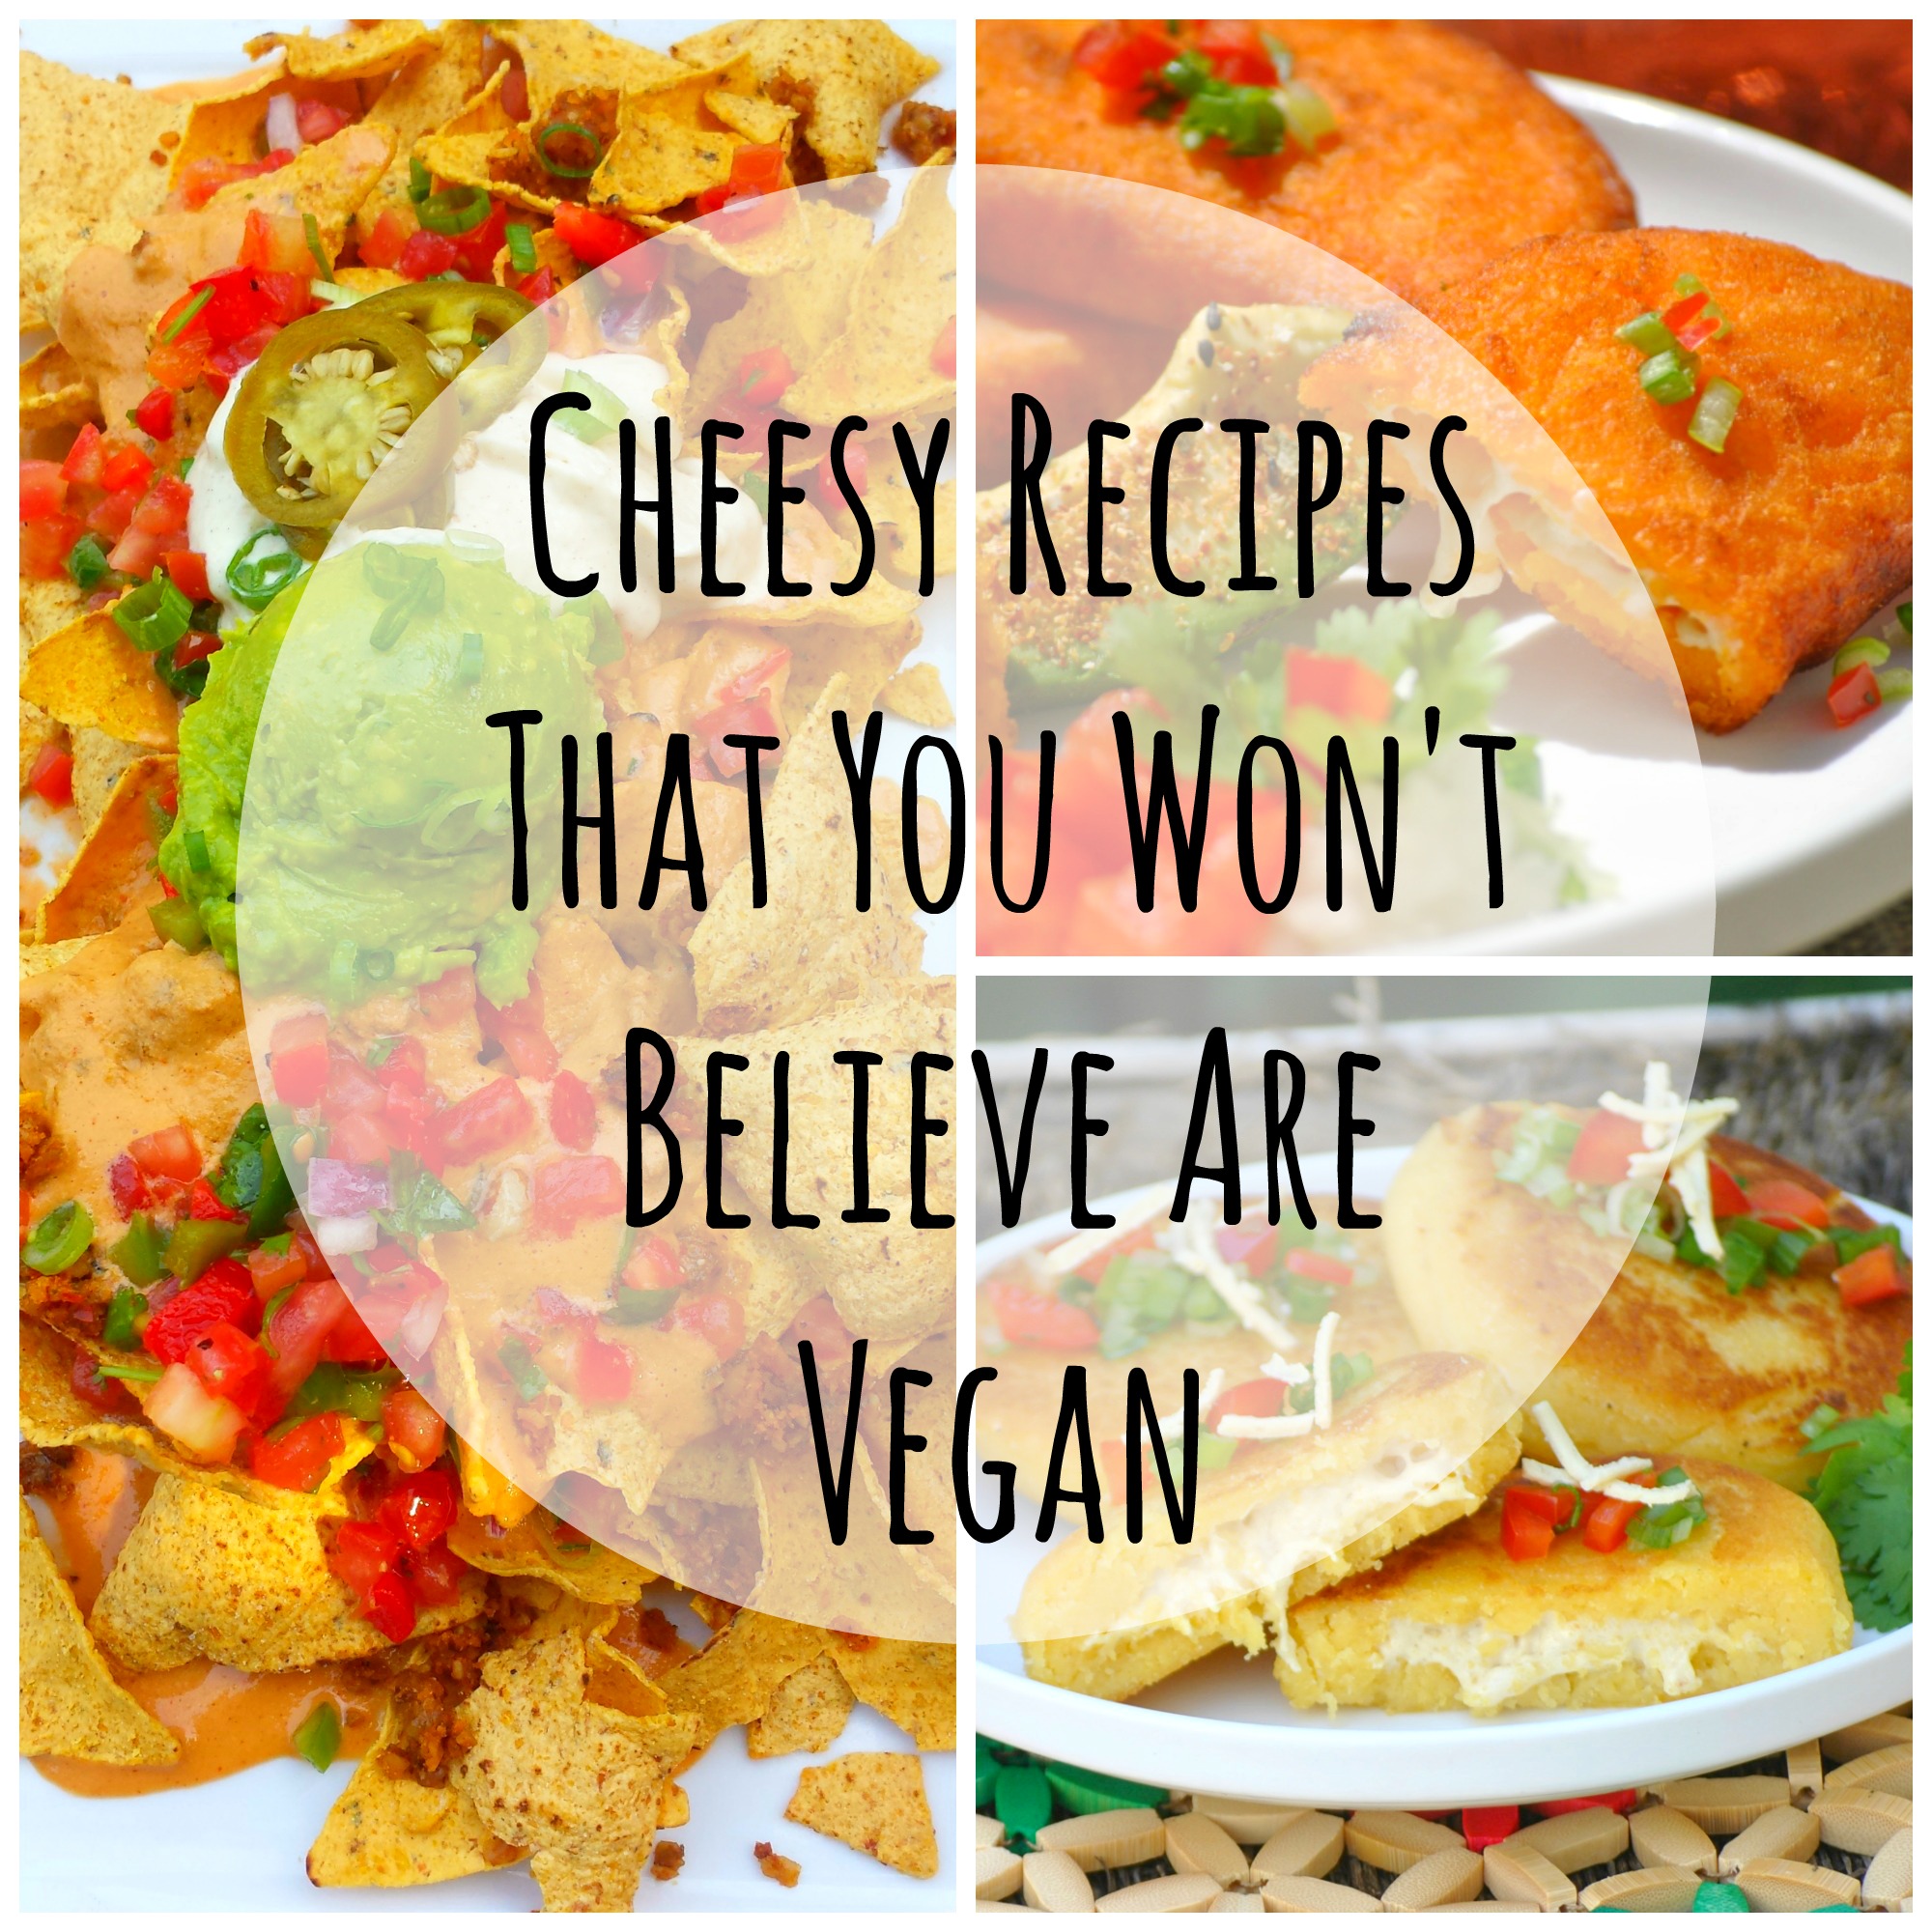 Cheesy Recipes That You Won't Believe Are Vegan | Blog | PETA Latino